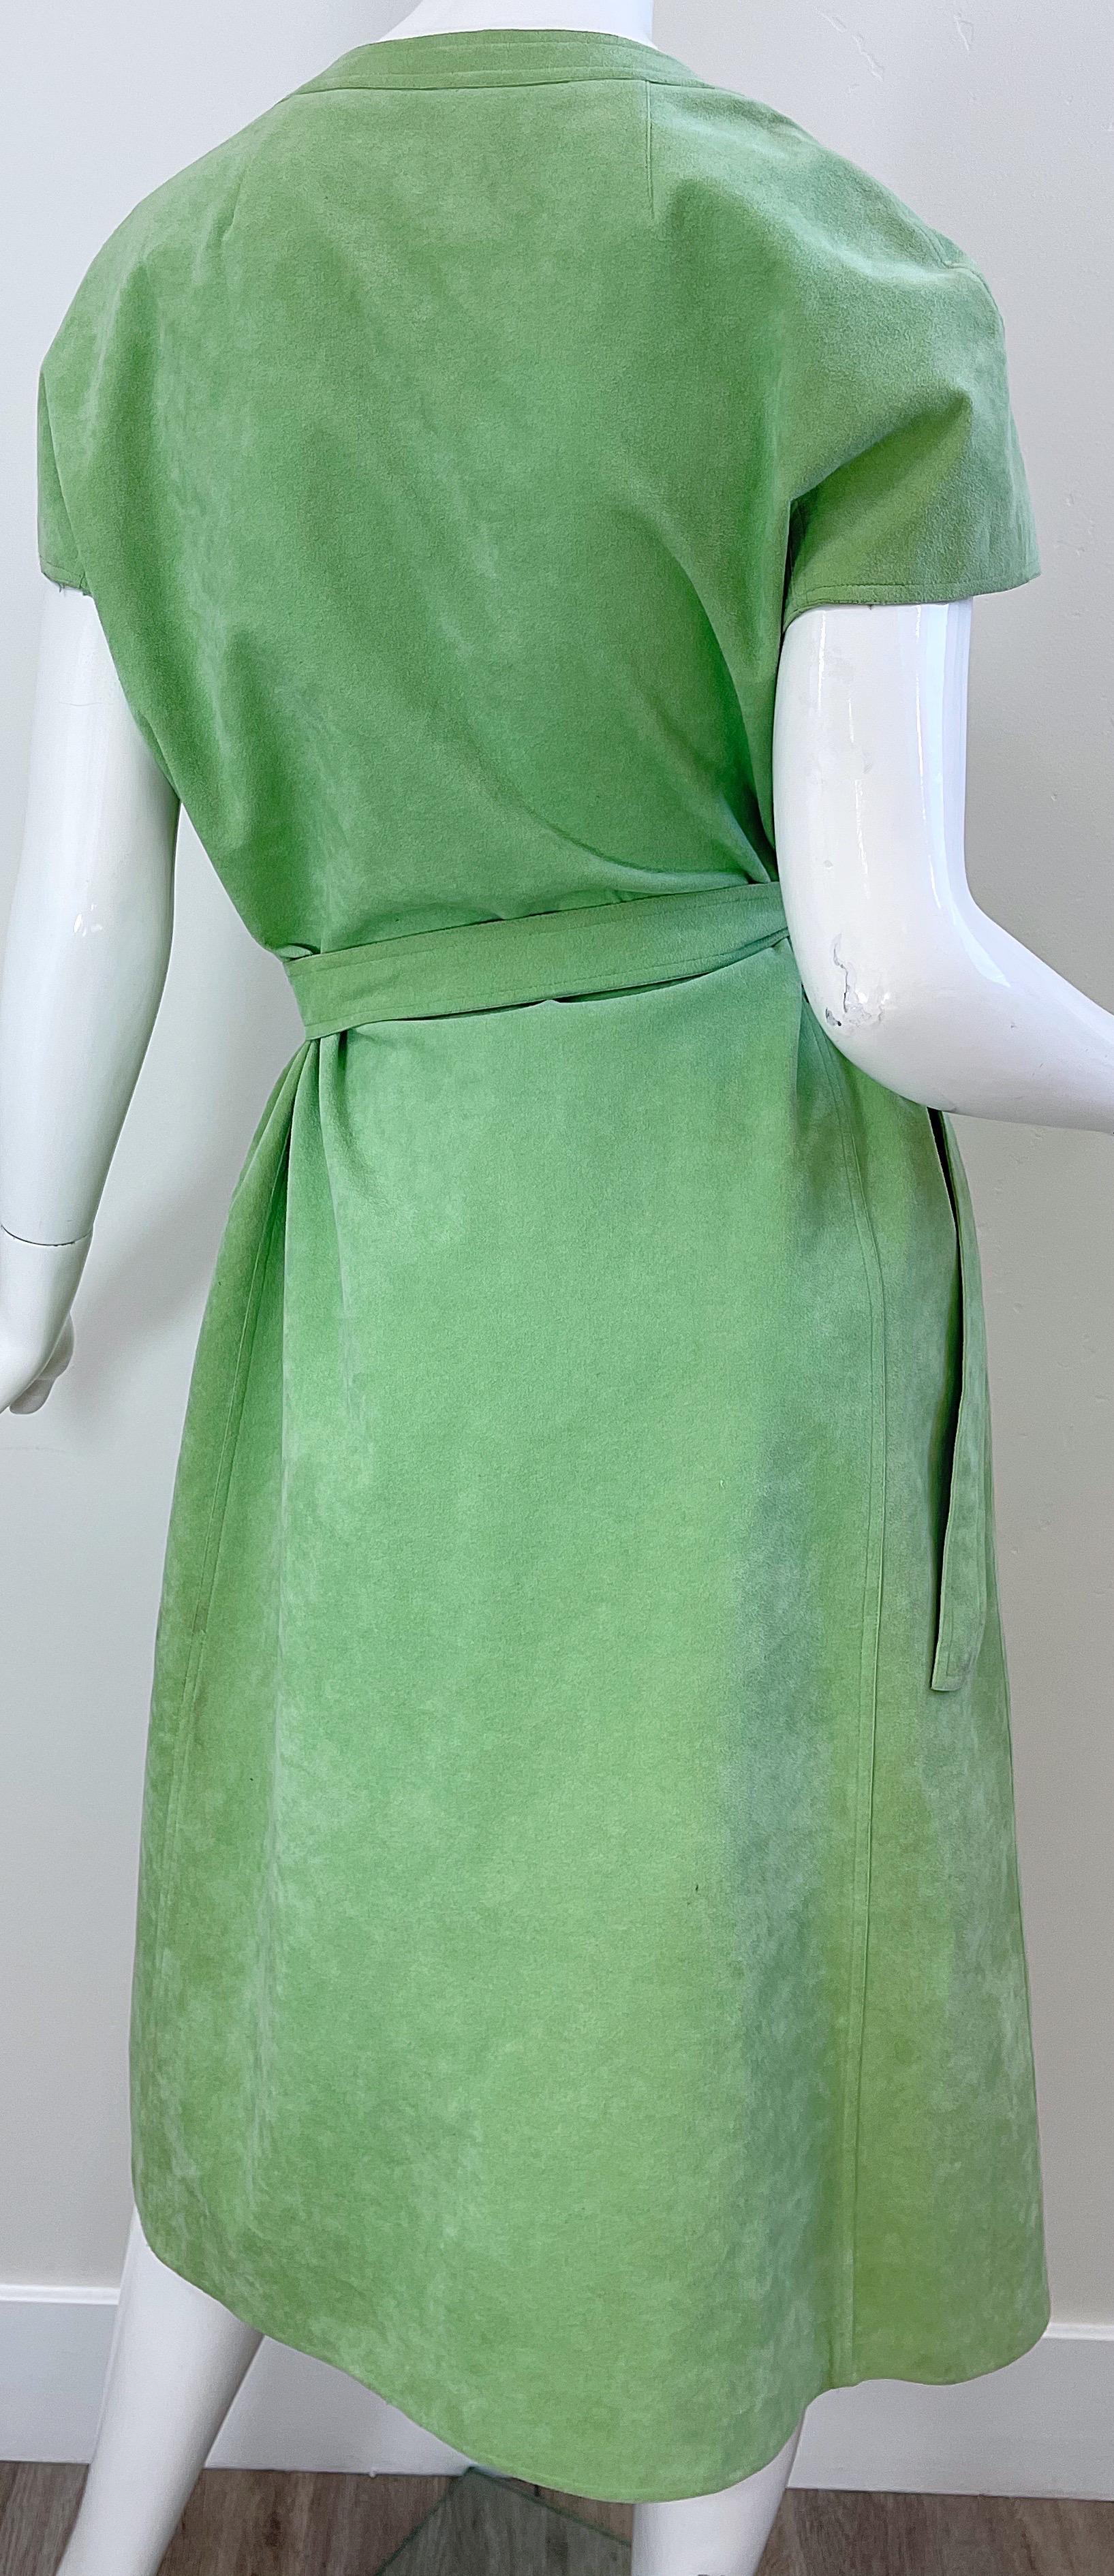 Halston 1970s Pistachio Green Ultra Suede Short Sleeve Vintage 70s Shirt Dress For Sale 6